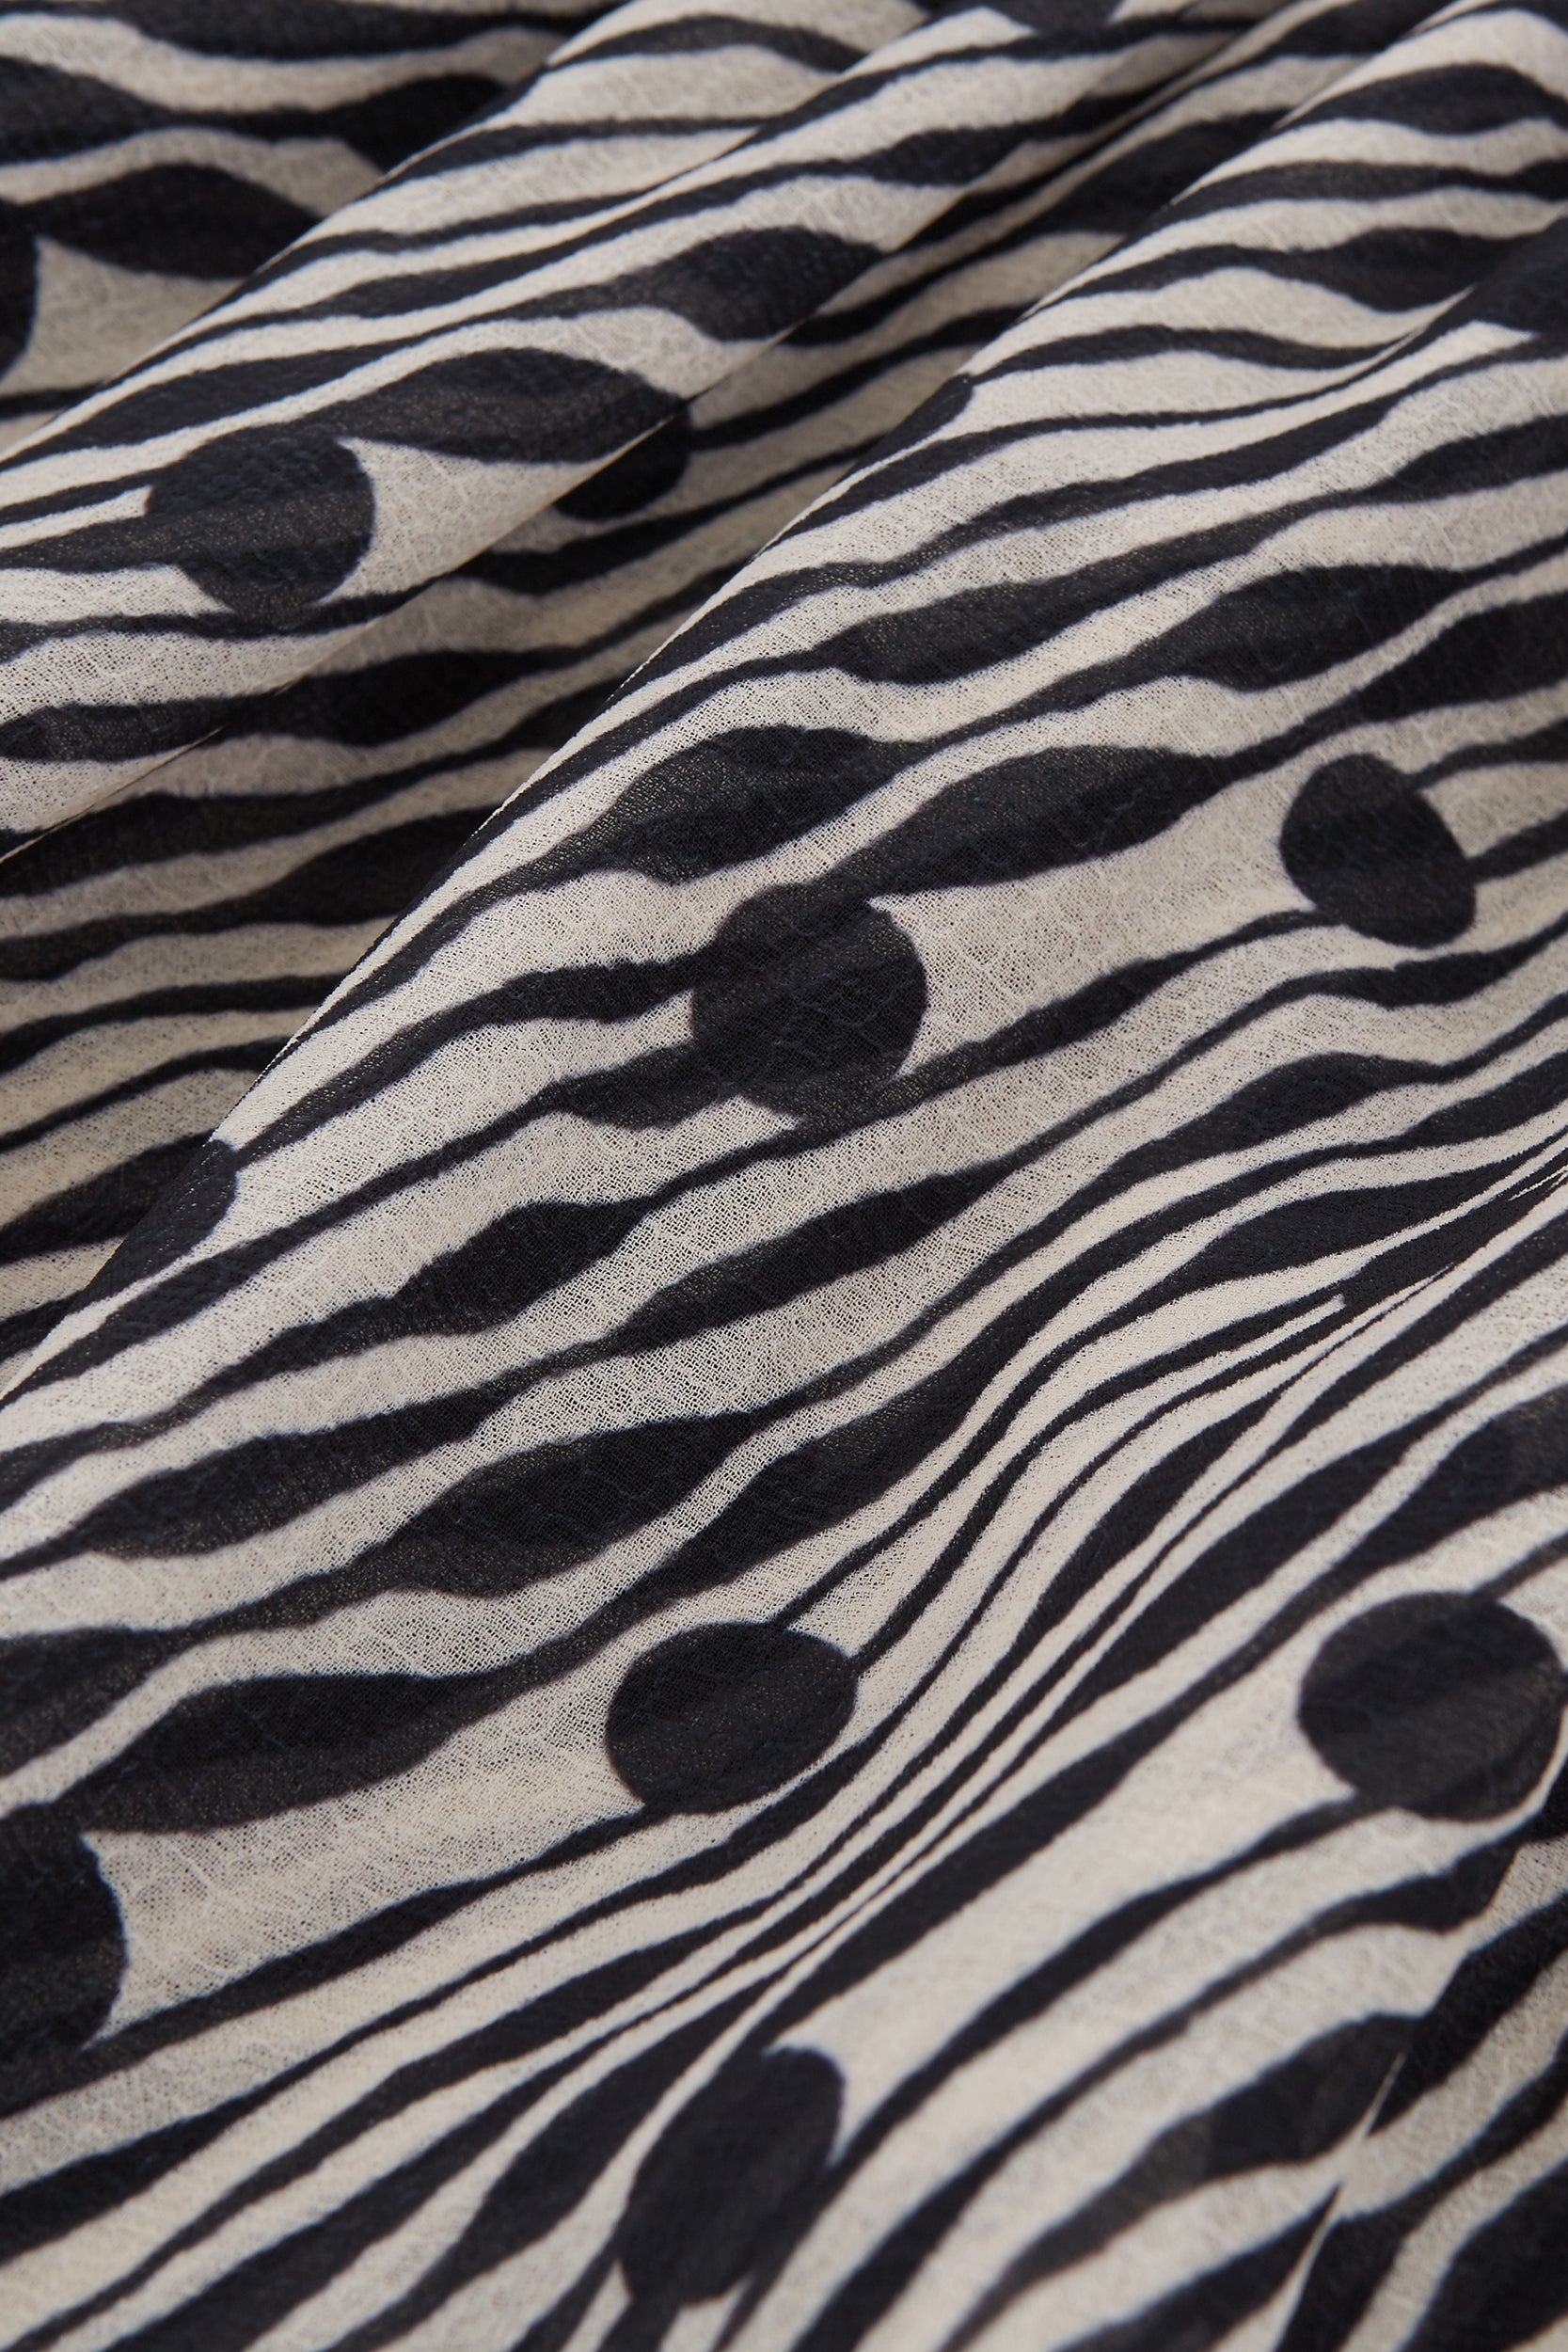 Polka Dot Zebra Print Izel Dress